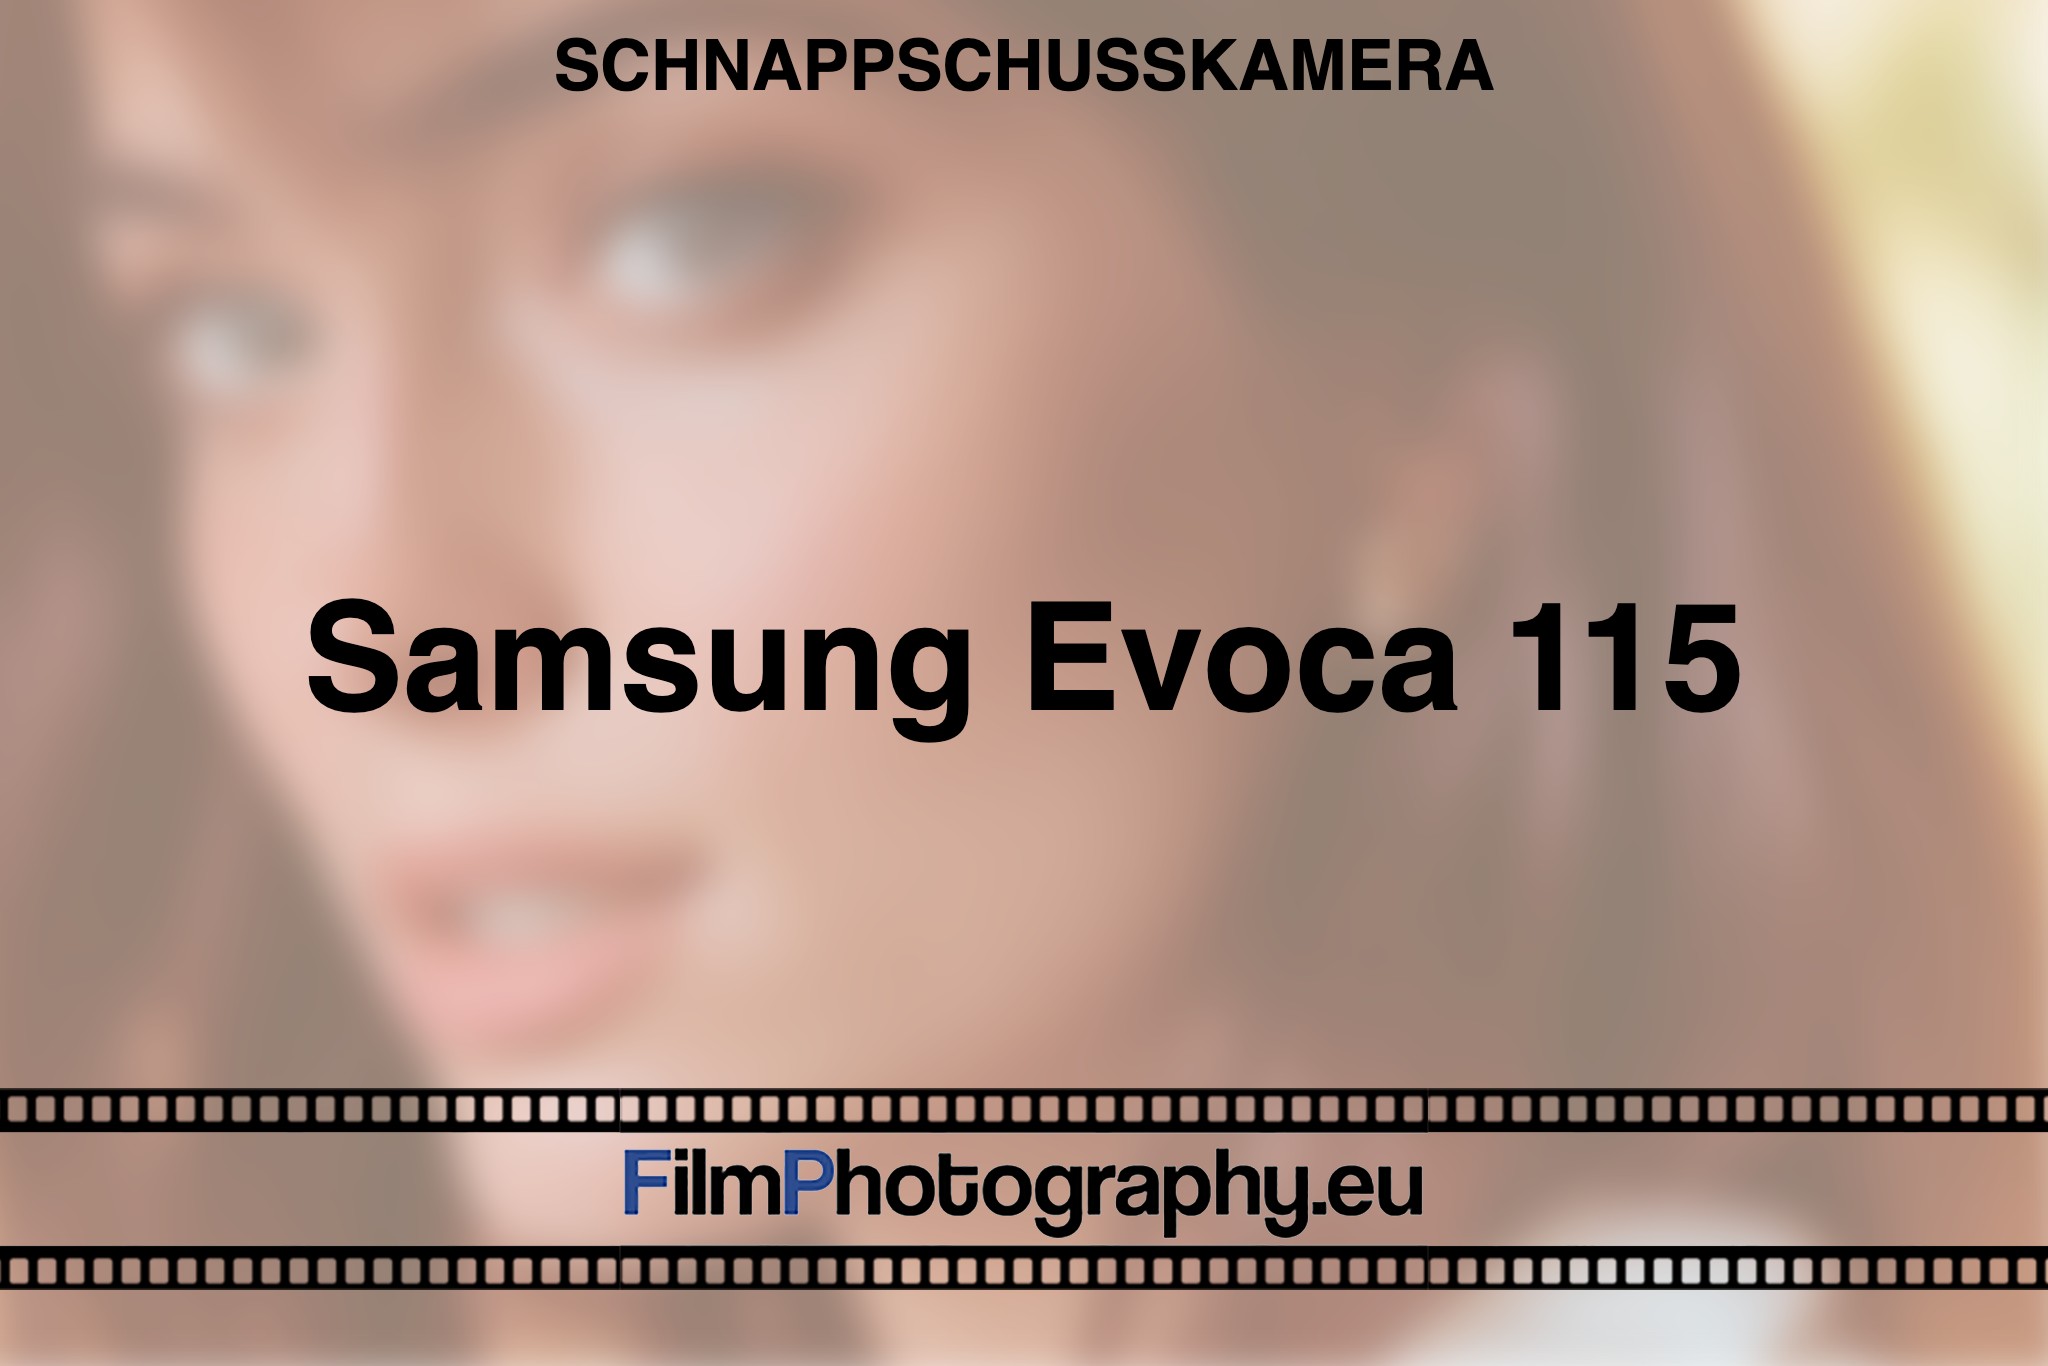 samsung-evoca-115-schnappschusskamera-bnv